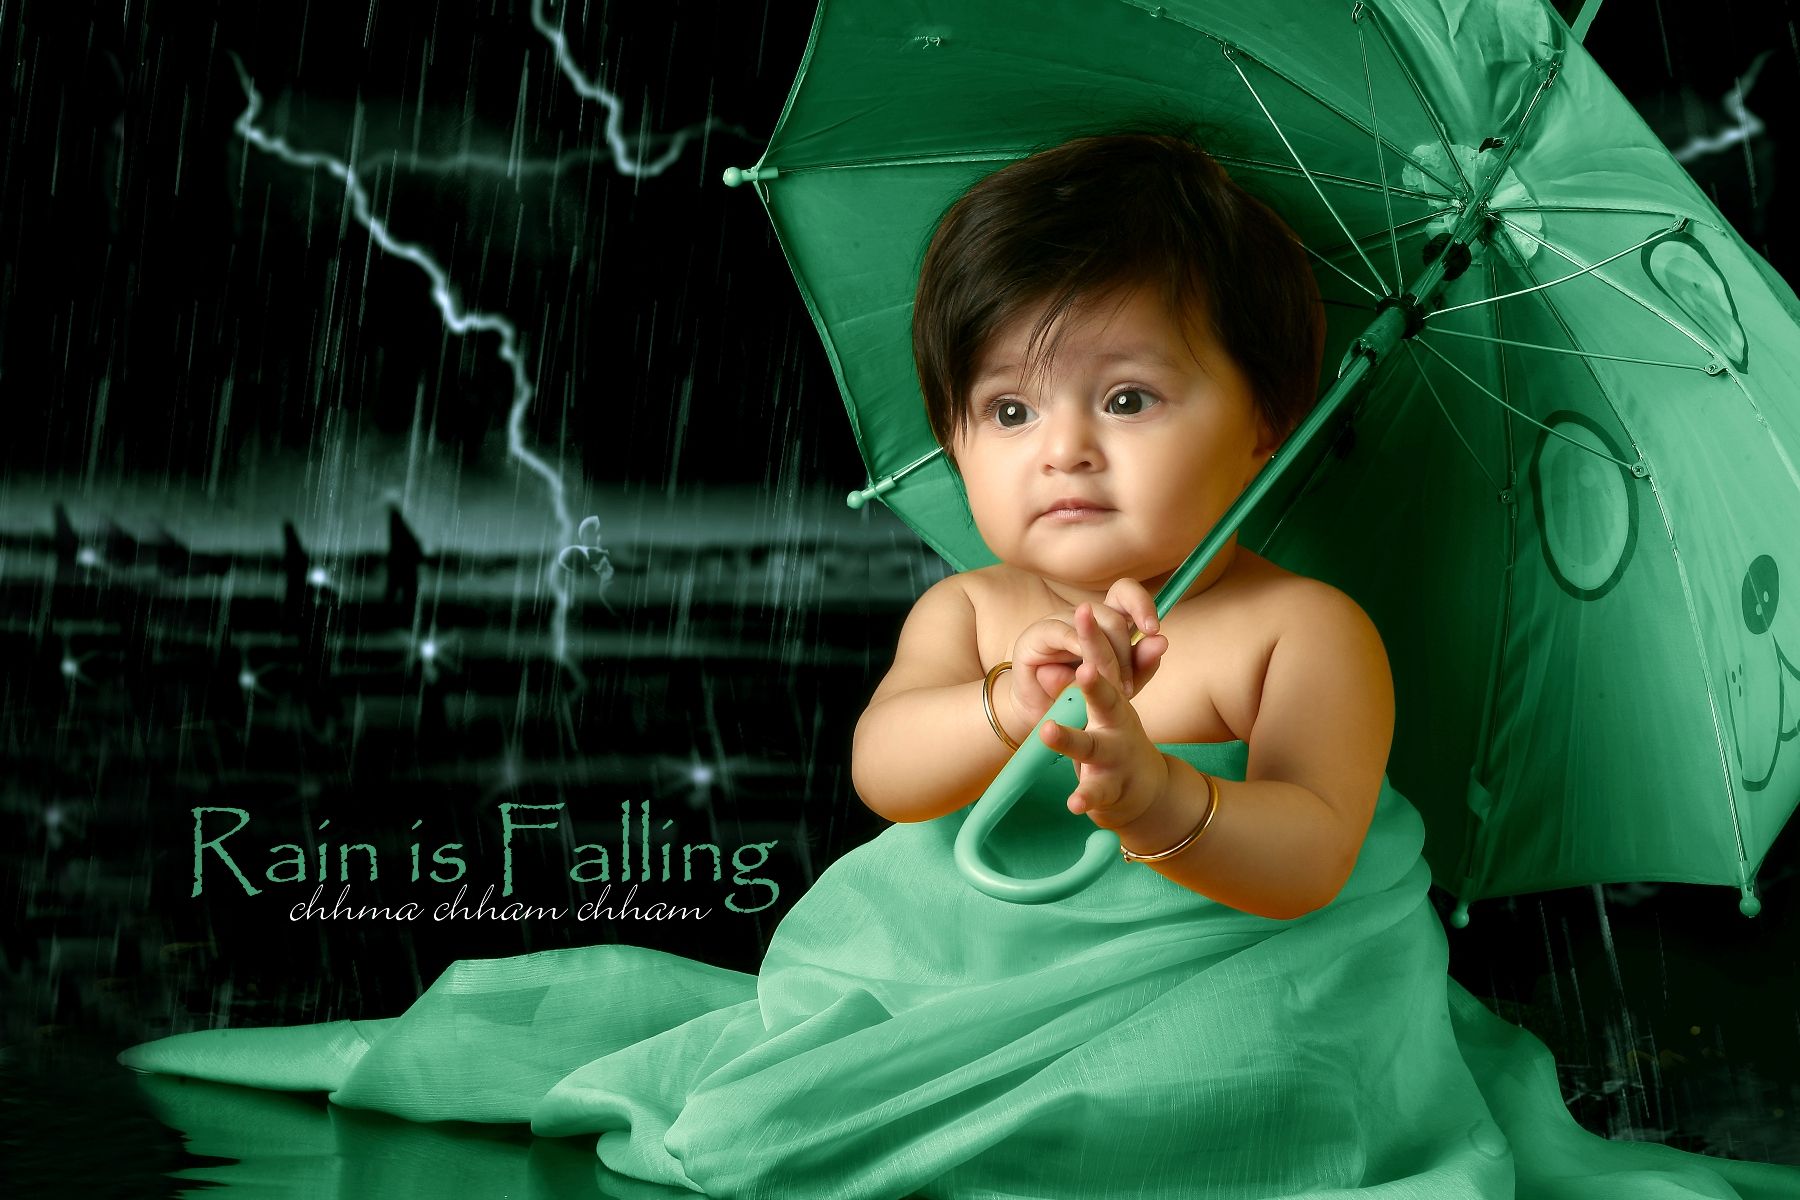 Sweet Baby Hd Wallpaper Cute Baby Images Hd Download 1800x1200 Wallpaper Teahub Io